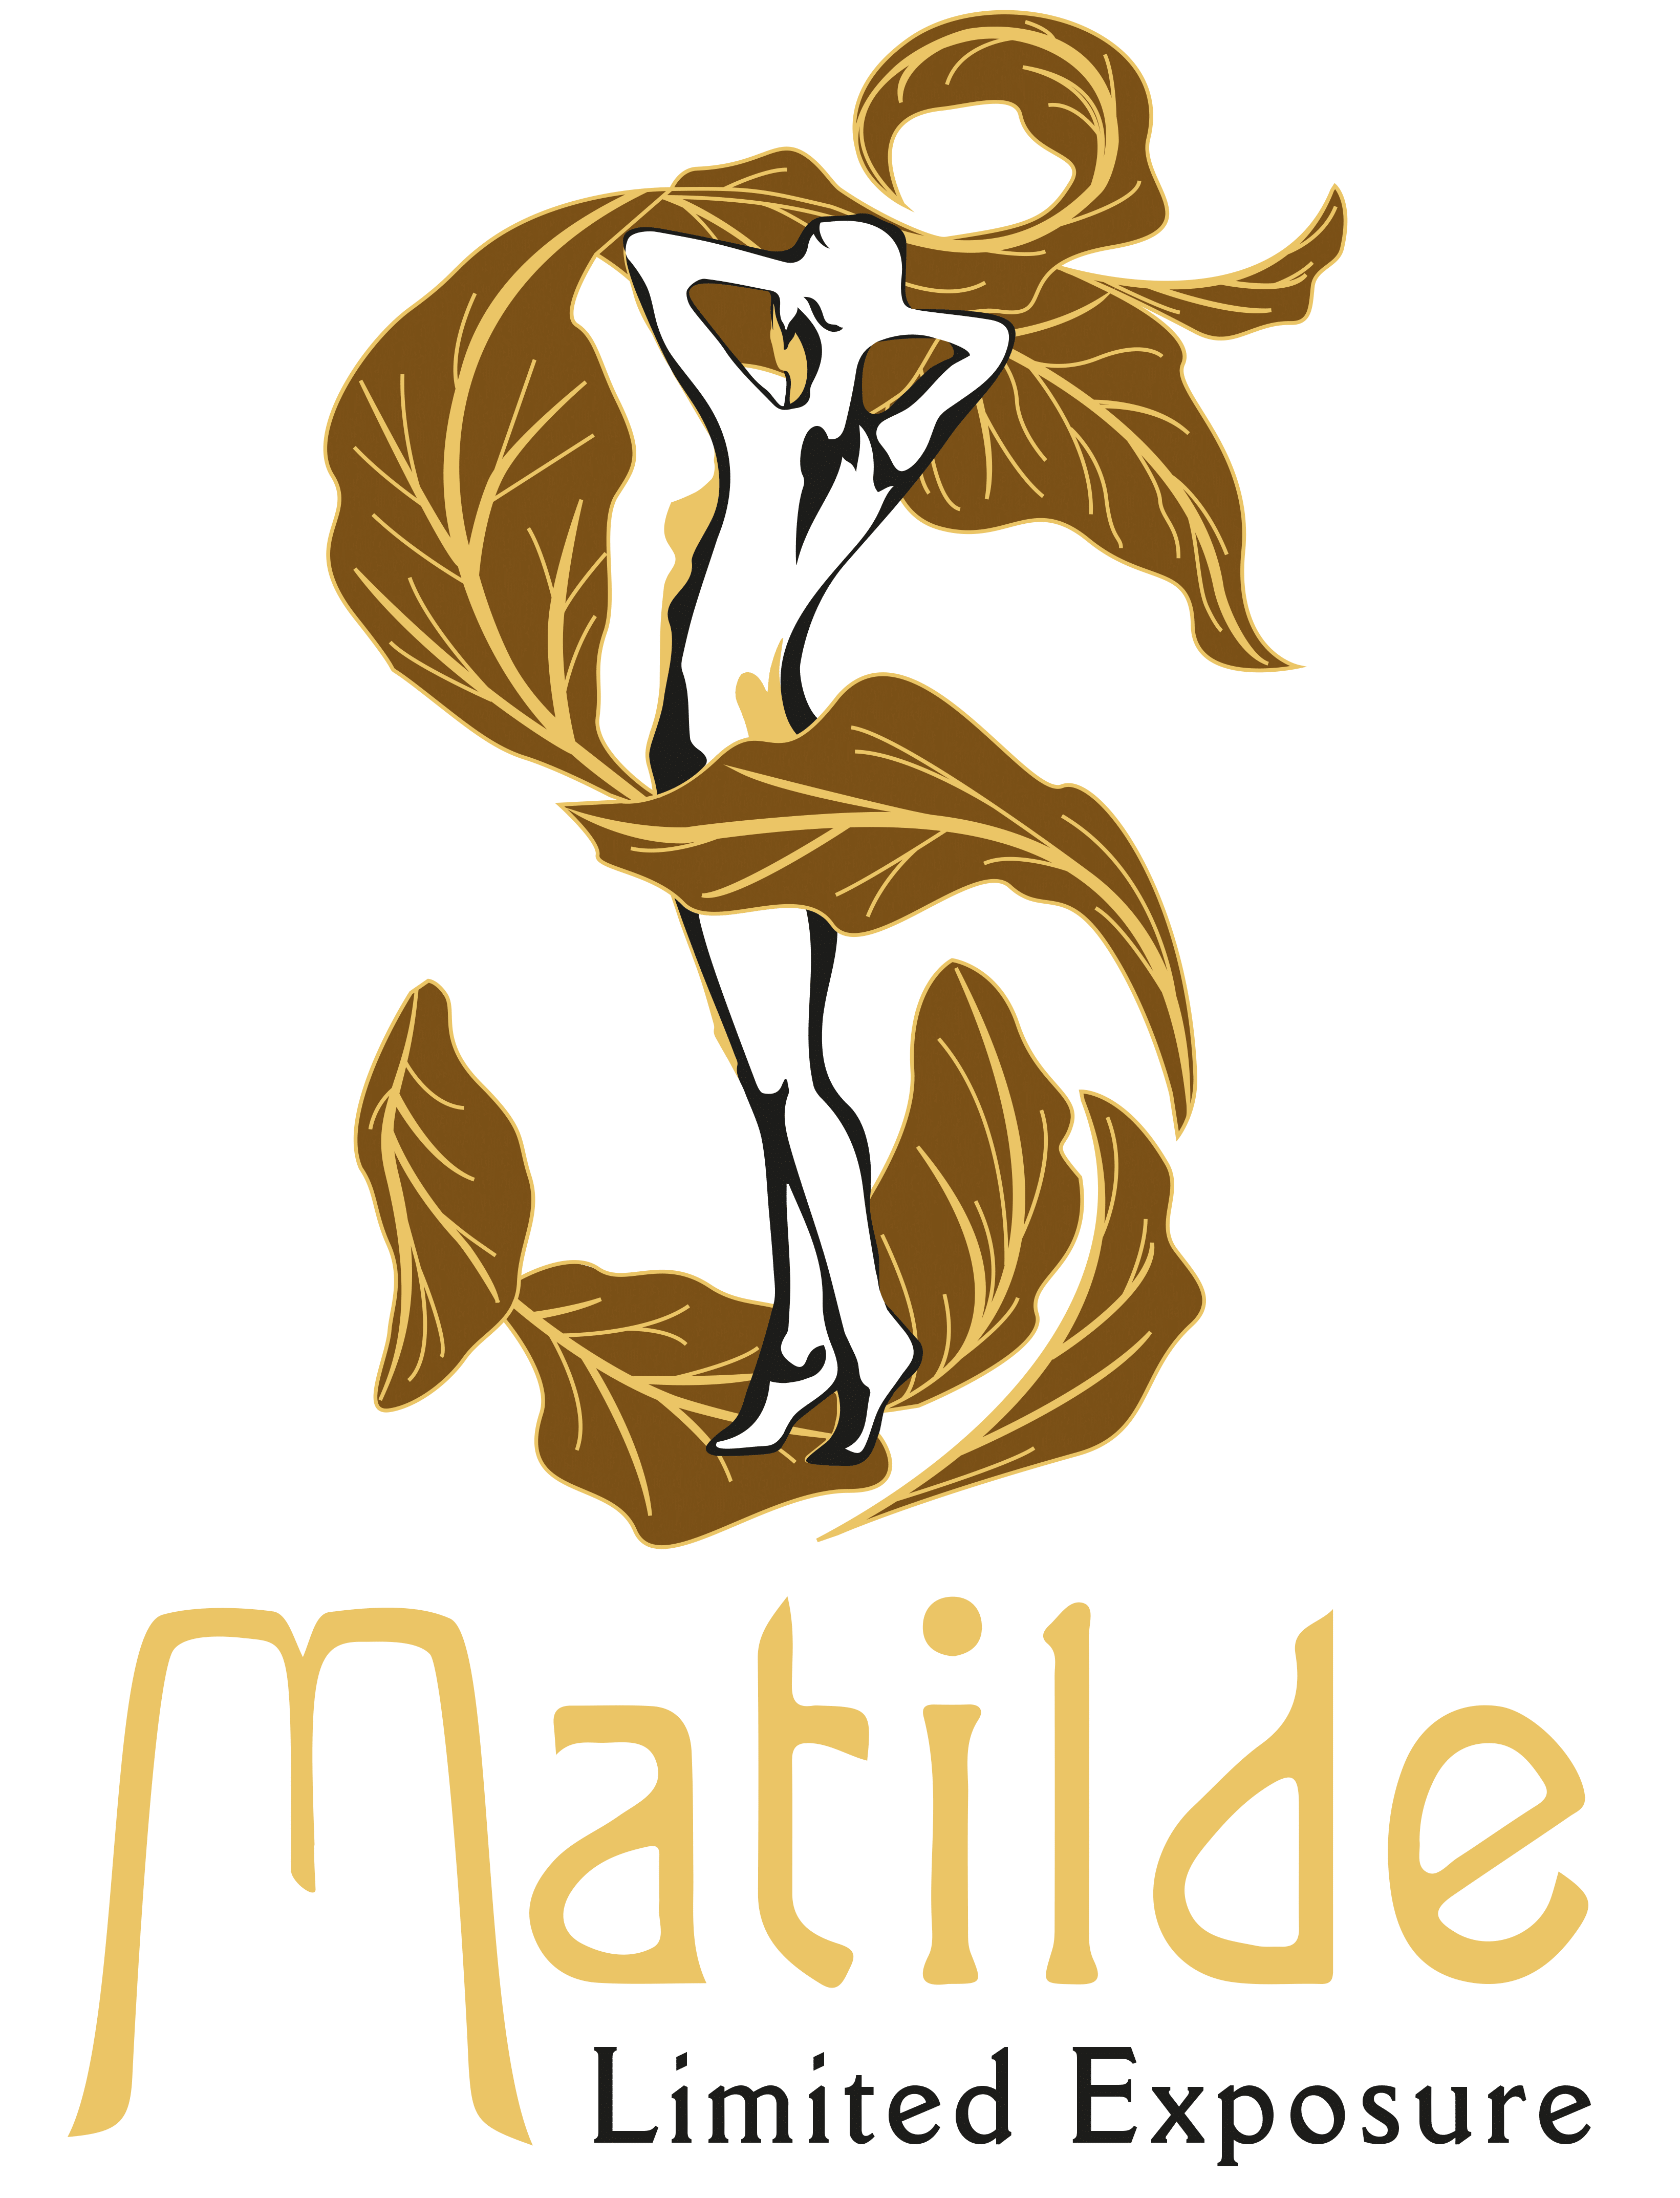 Matilde Releasing Limited Exposure at PCA - Cigar News